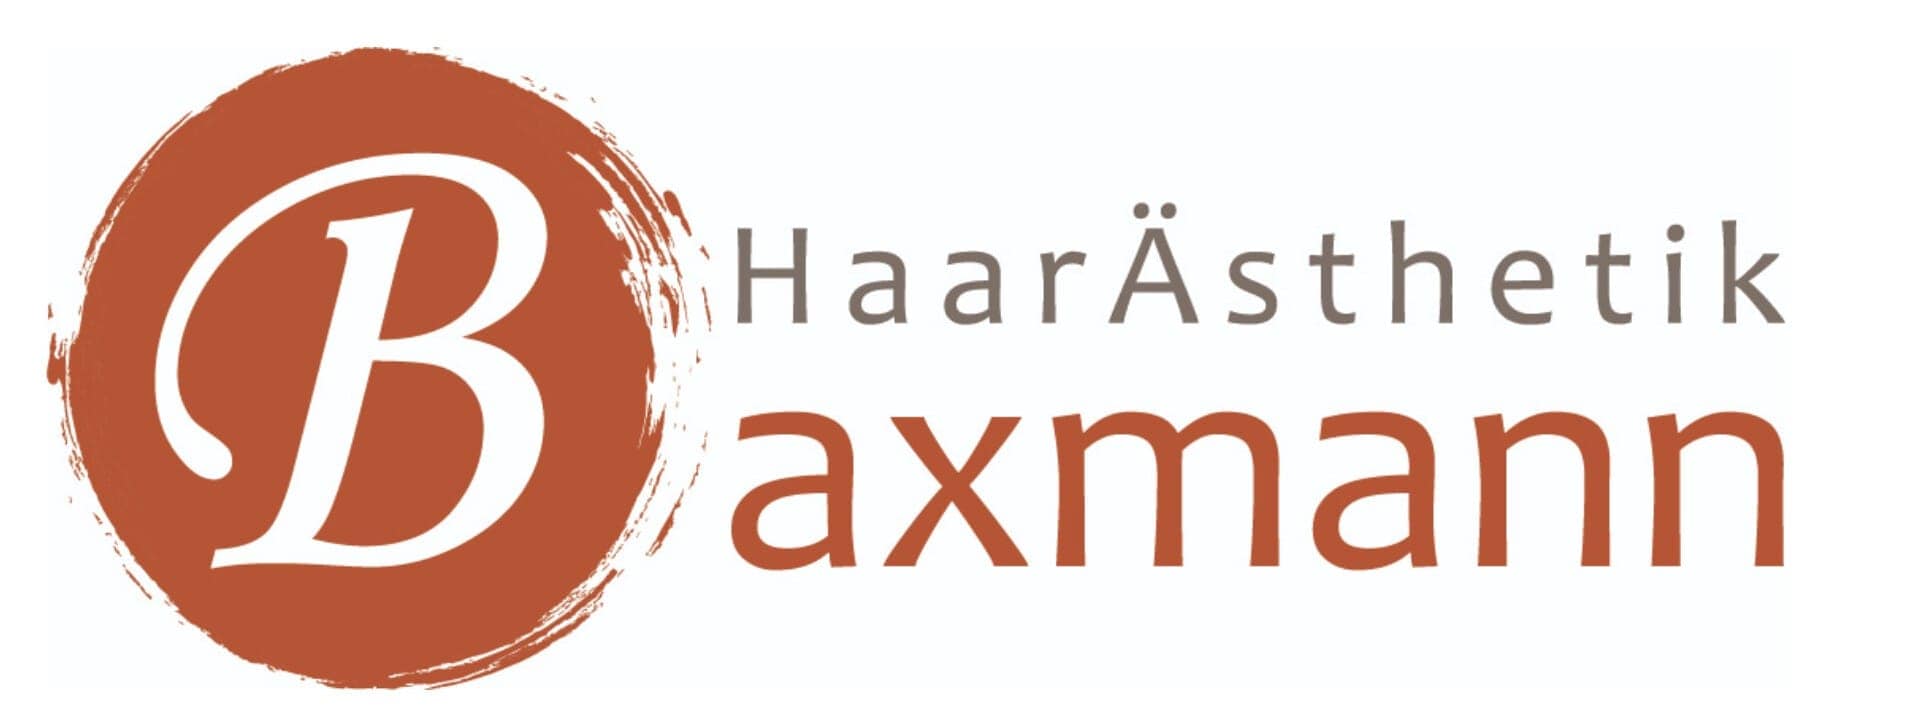 Logo Baxmann Haarästhetik, Die Zweithaarspezialisten